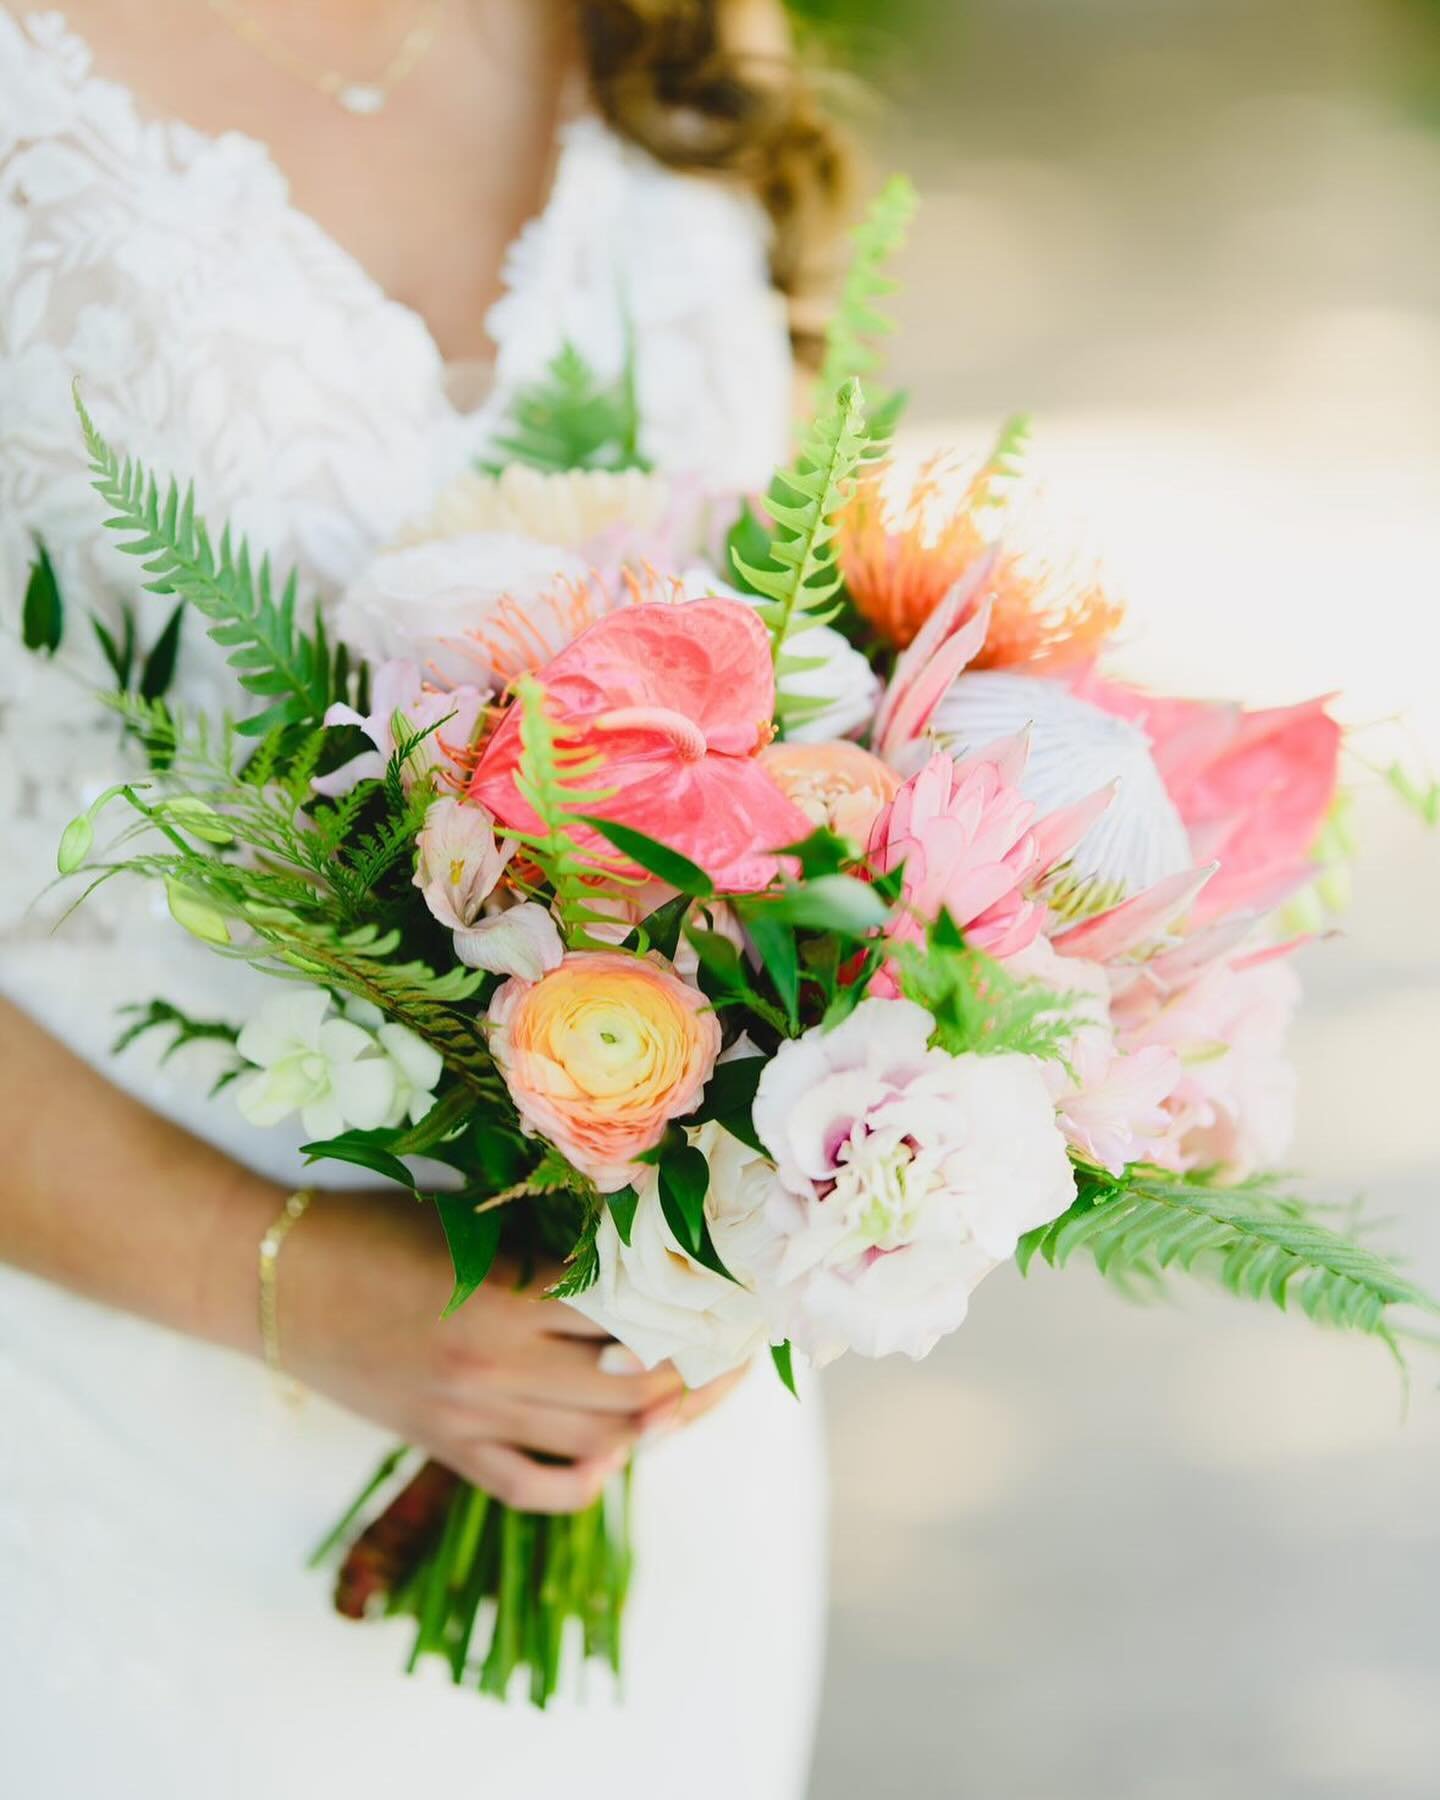 Tropical flowers in paradise 🌺

Photographer: @krislabangphotography 
Venue: @kaimeaestates 

#weddingflorist #weddingflowers #tropicalwedding #hawaiiwedding #oahuwedding #honoluluwedding #oahuflorist #honoluluflorist #waikikiwedding #weddingbouquet